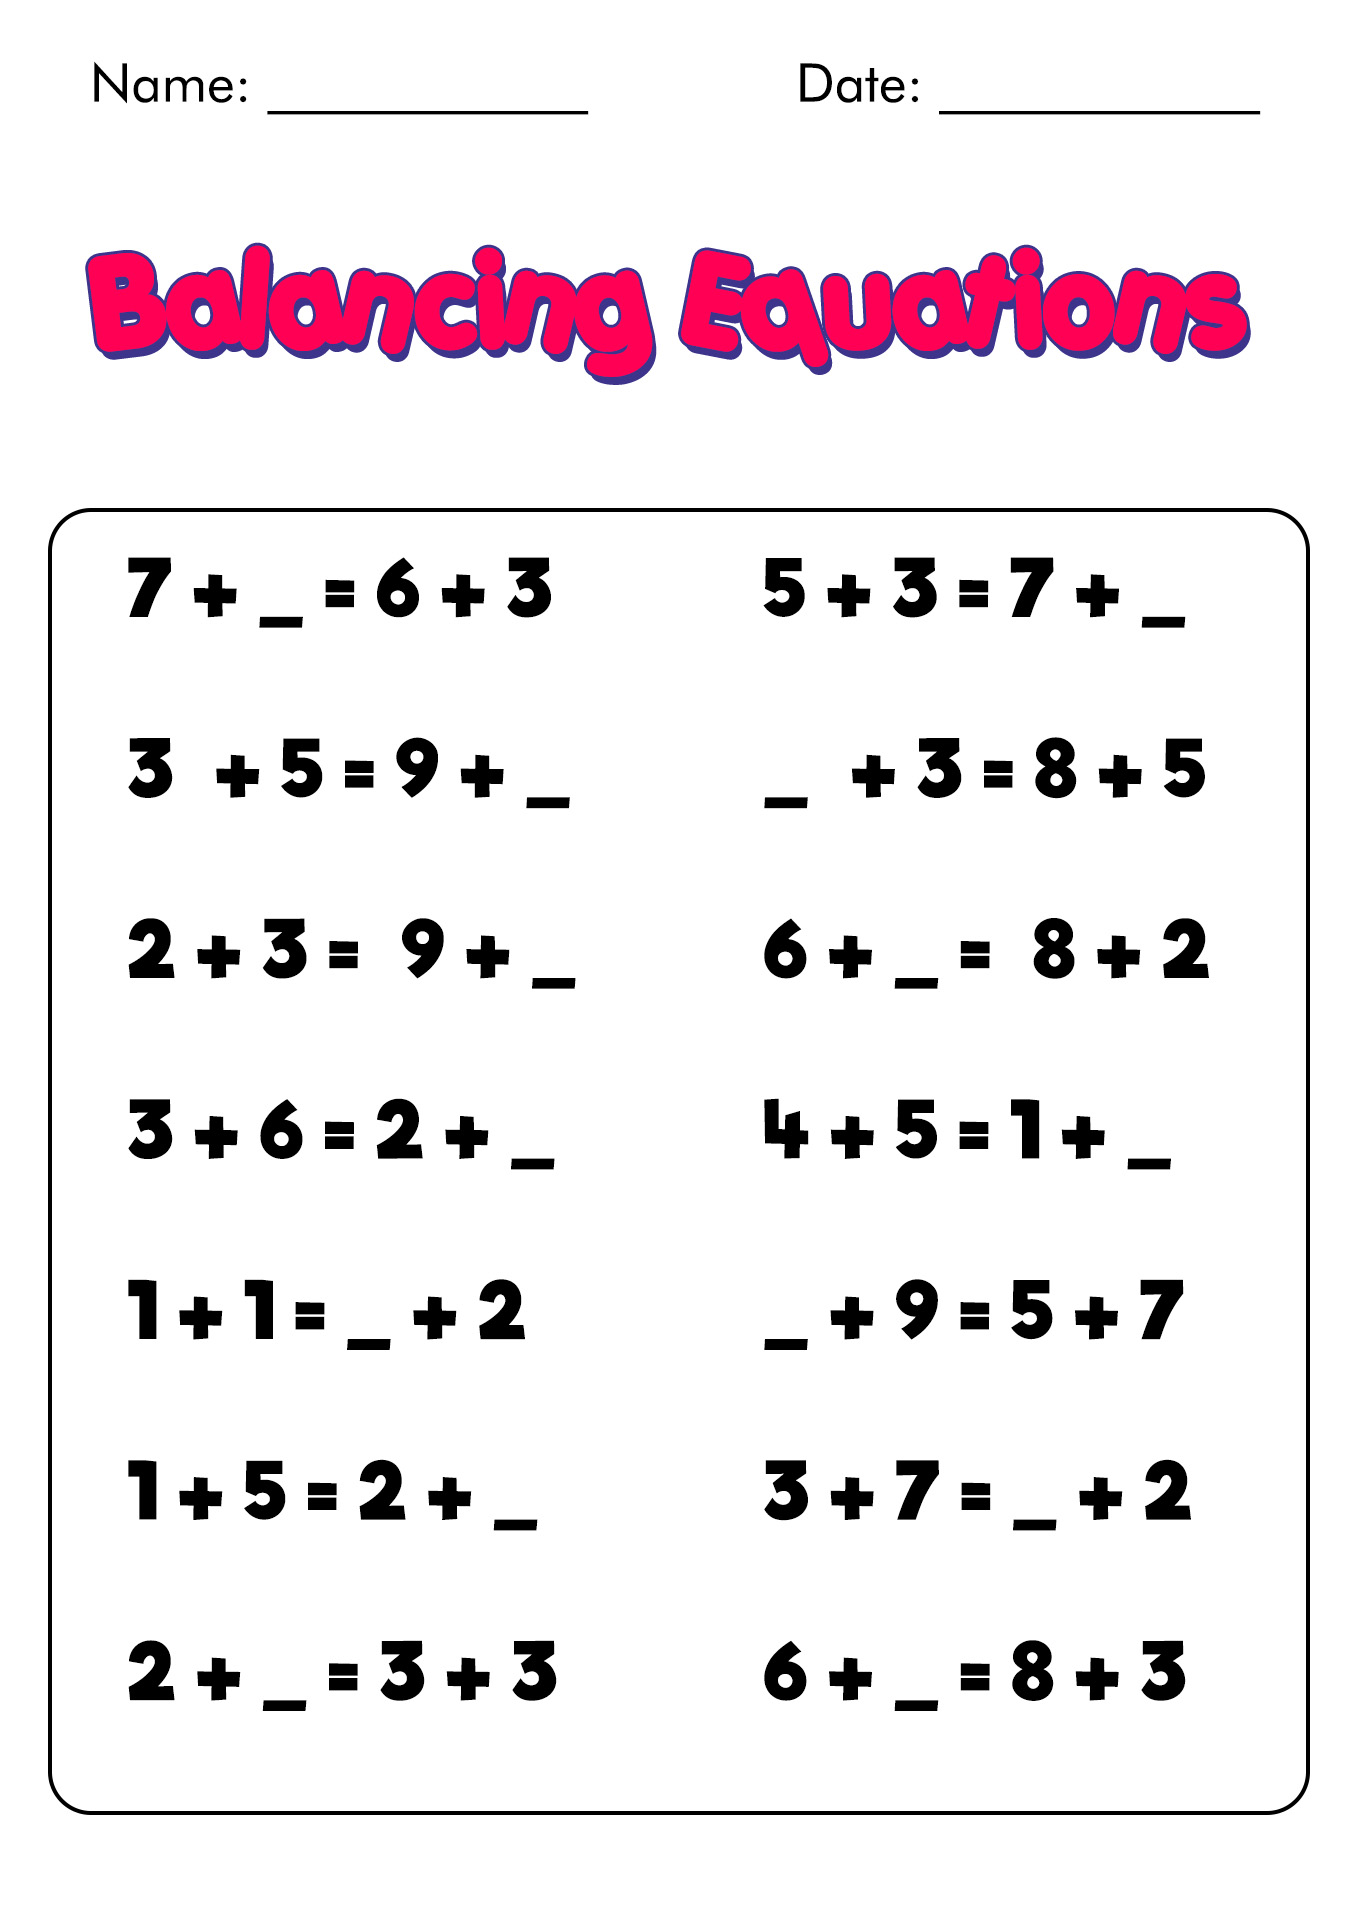 Balancing Equations Worksheet First Grade Math Image